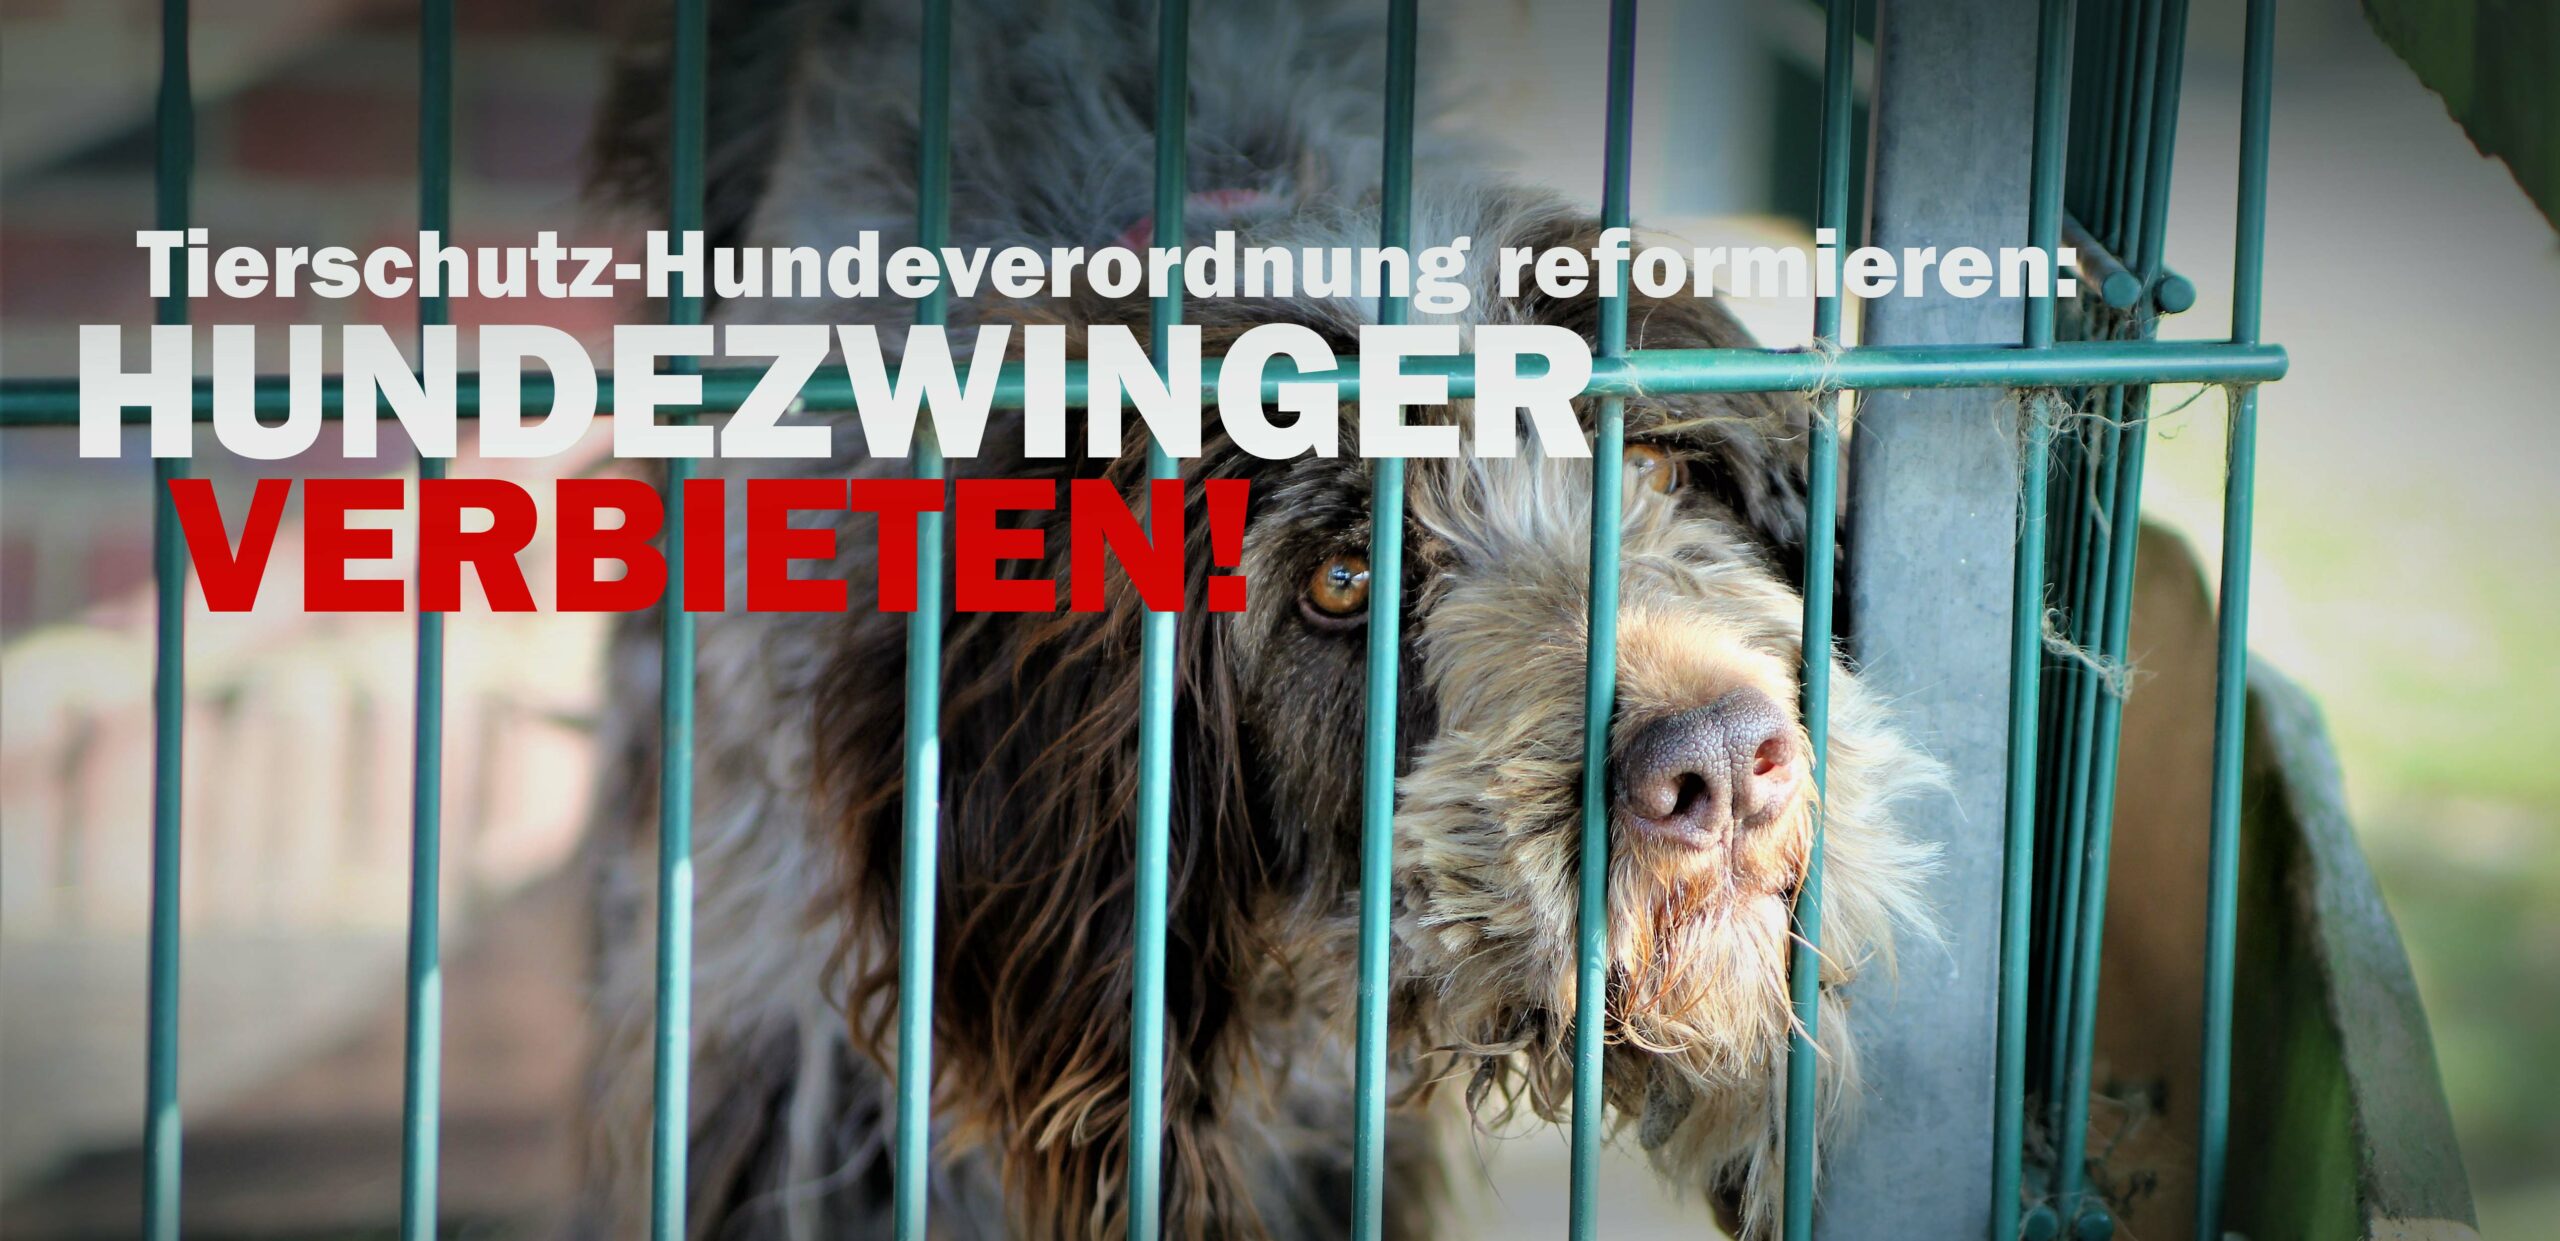 Hundezwinger1flat_slider-scaled